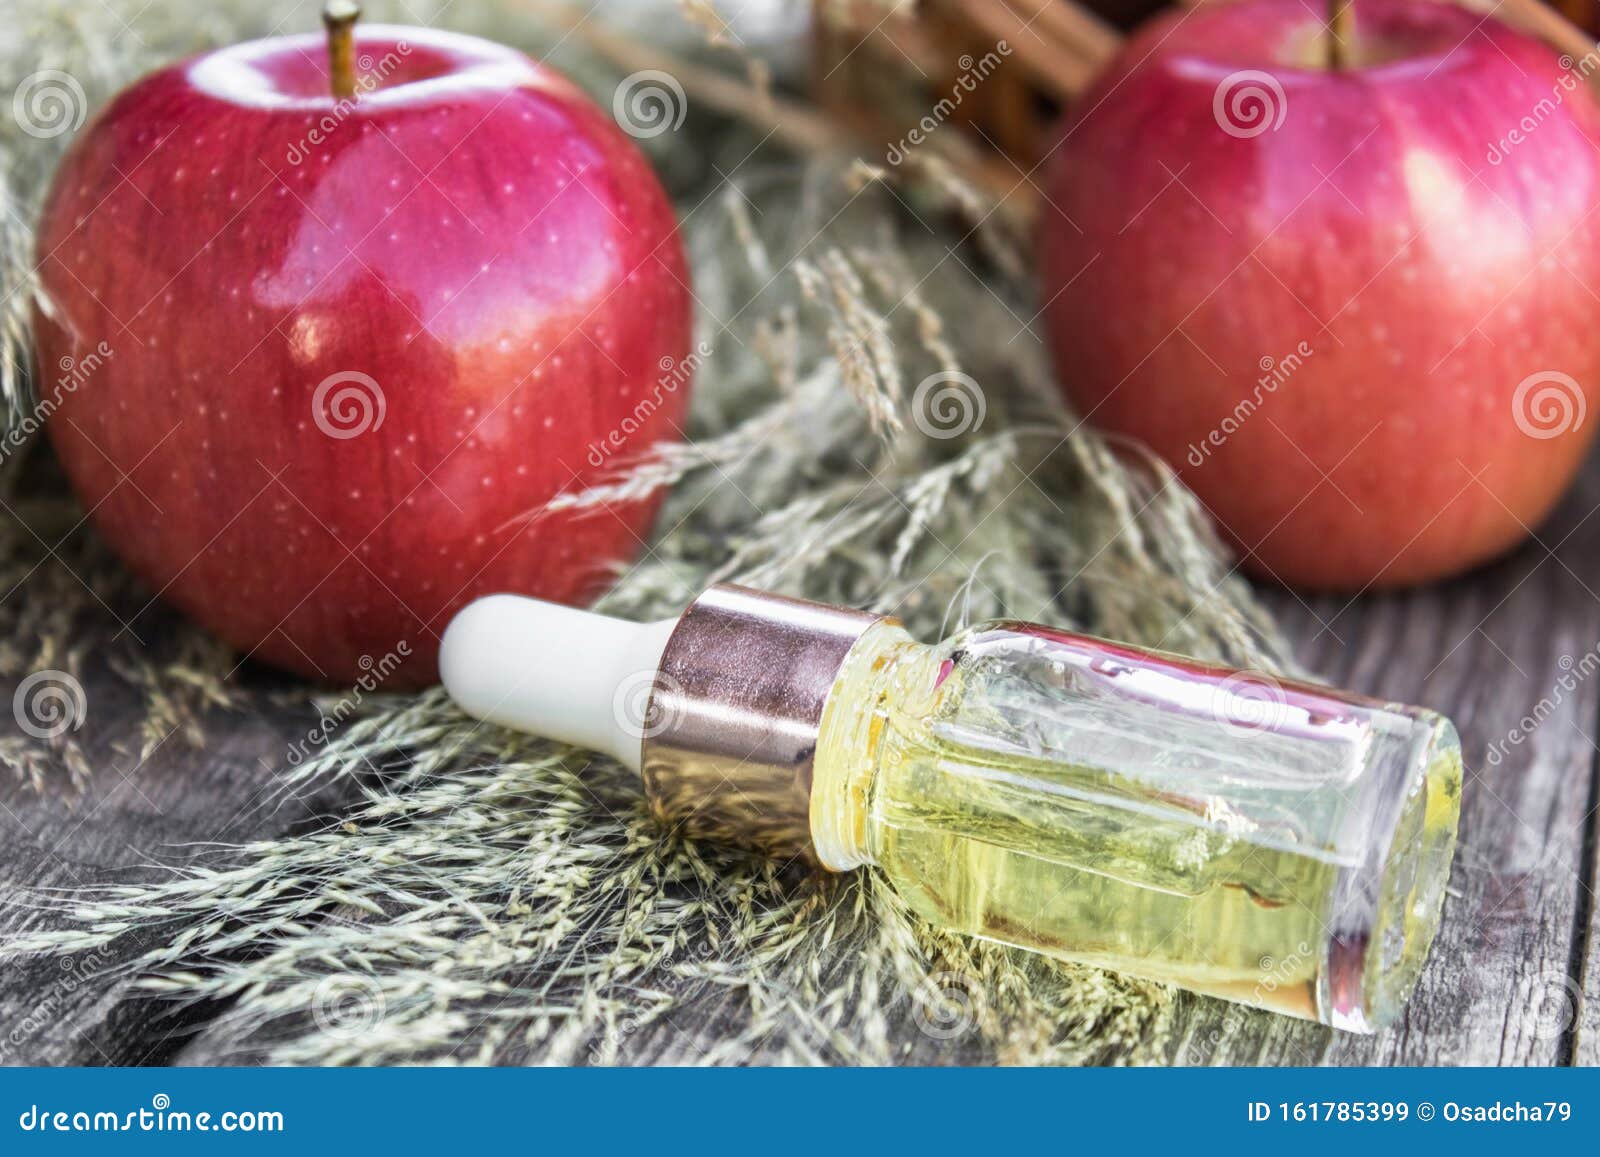 Glass bottle of apple essential oil near fresh apples on a wooden